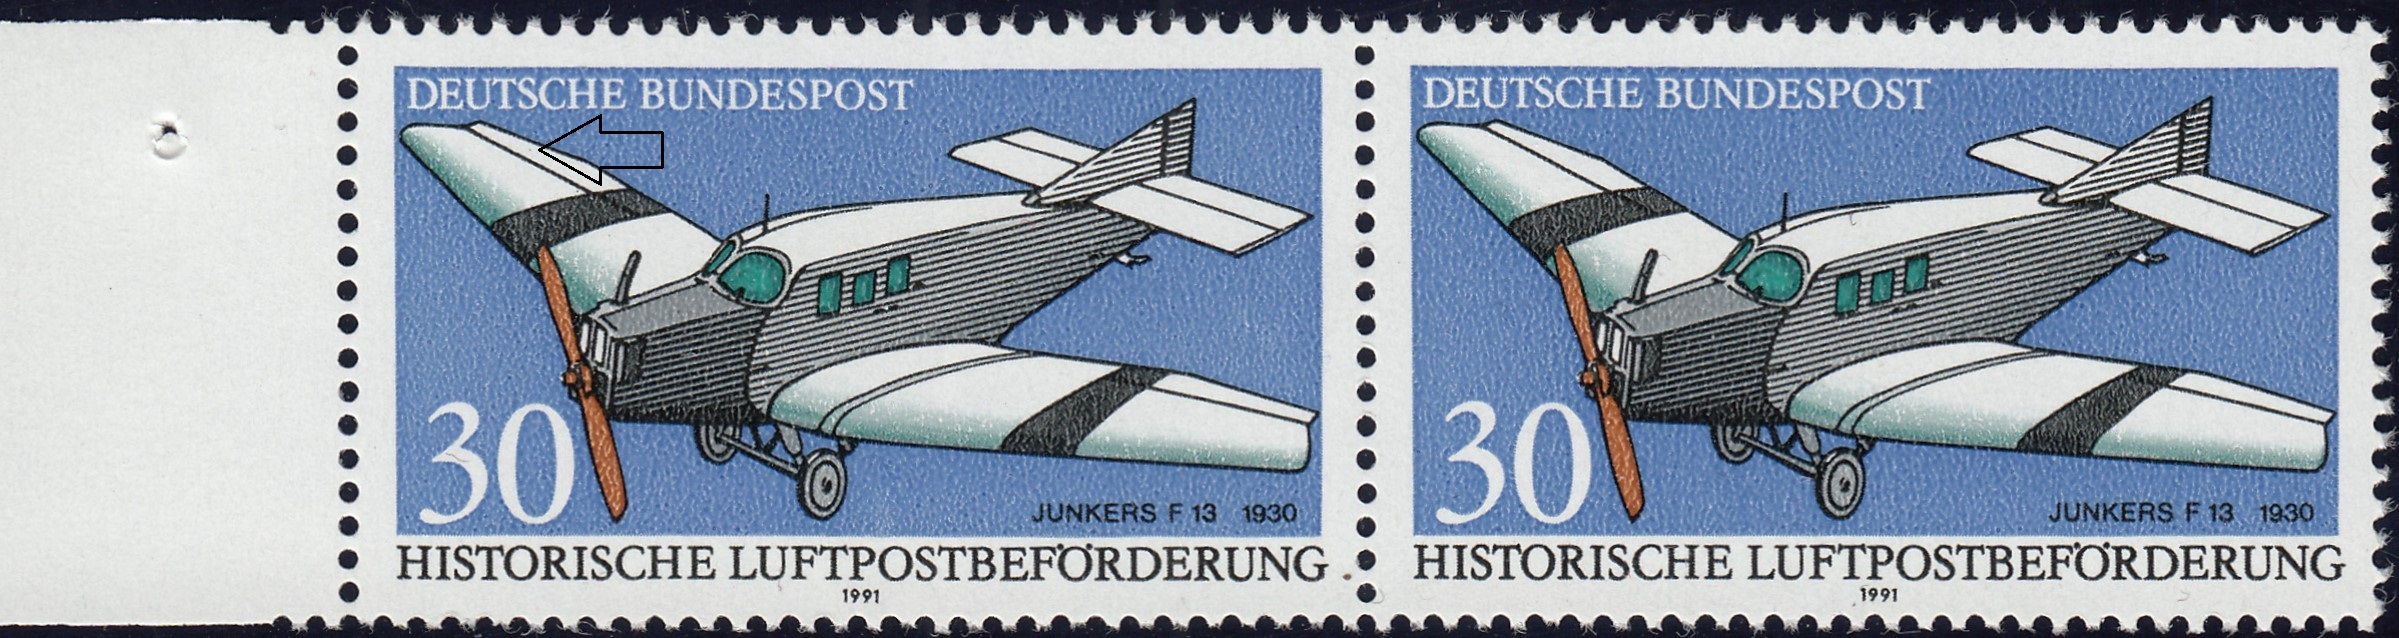 Airplane stamp Print. 13 posting